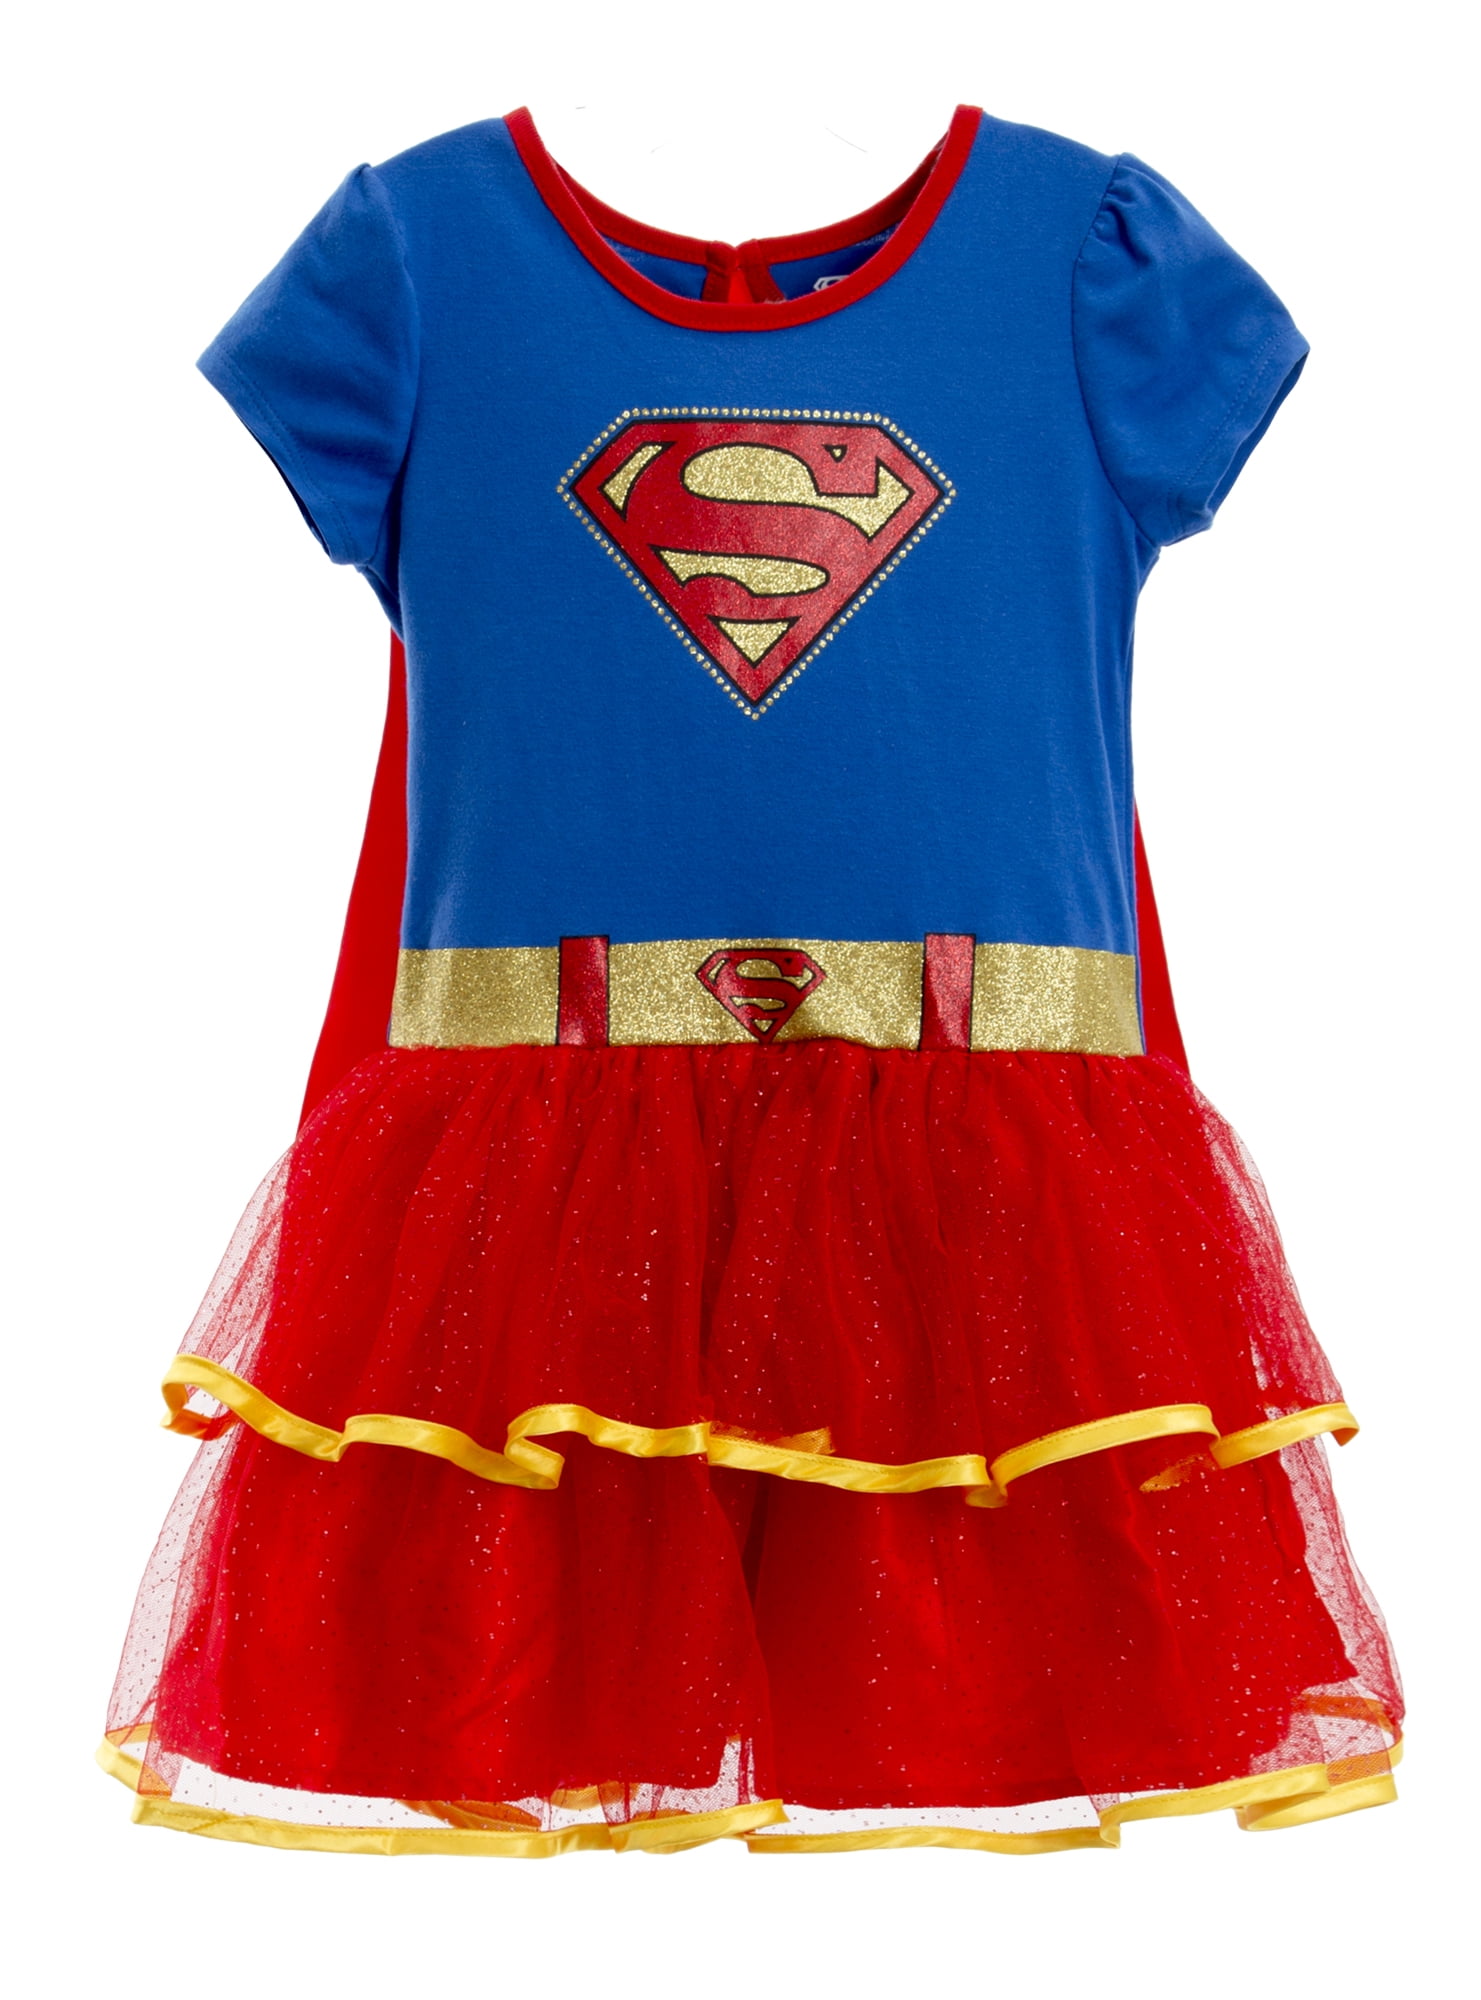 baby superhero fancy dress